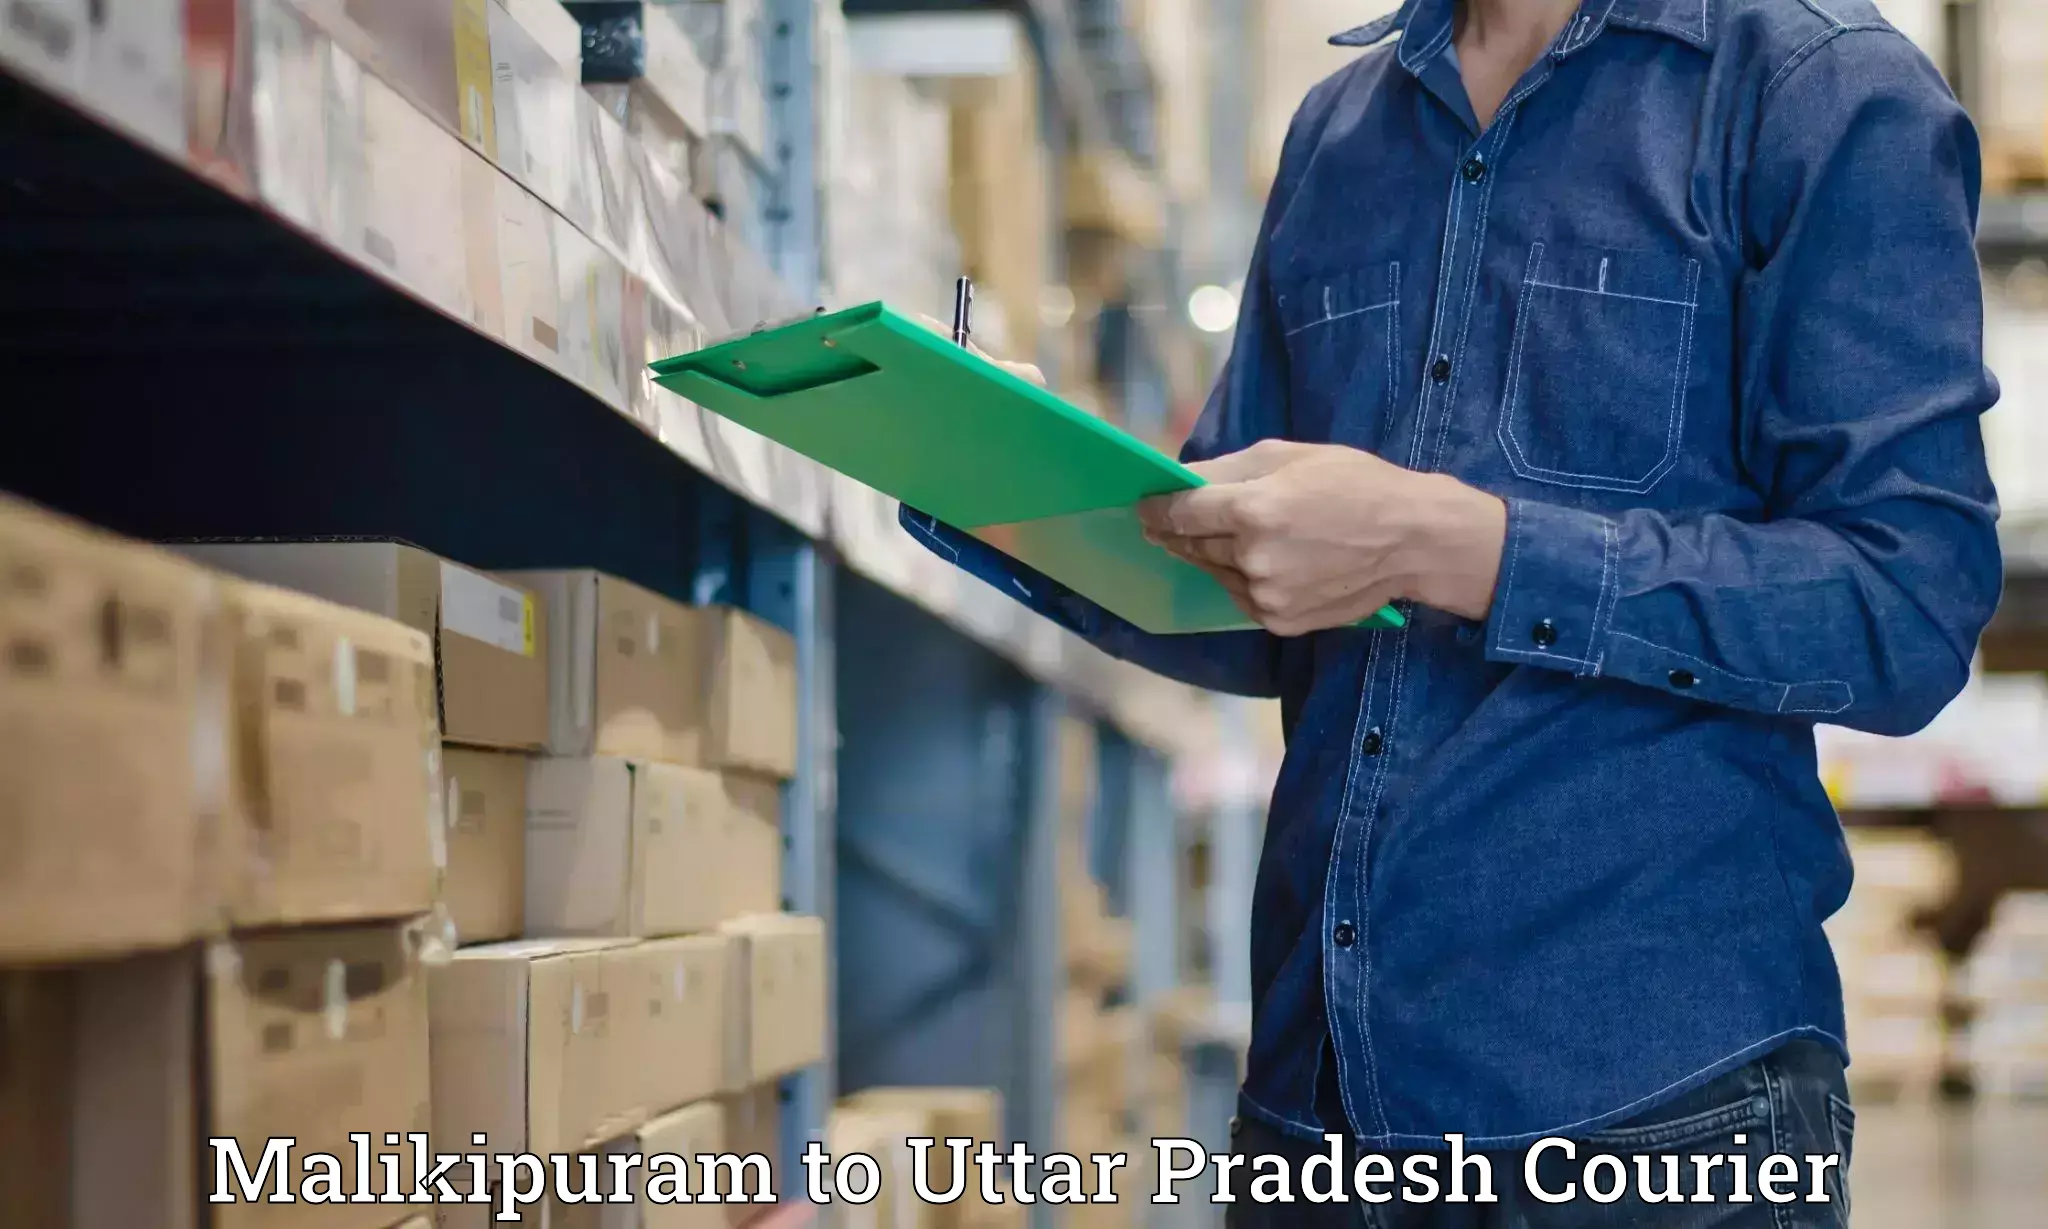 Quick dispatch service Malikipuram to Padrauna